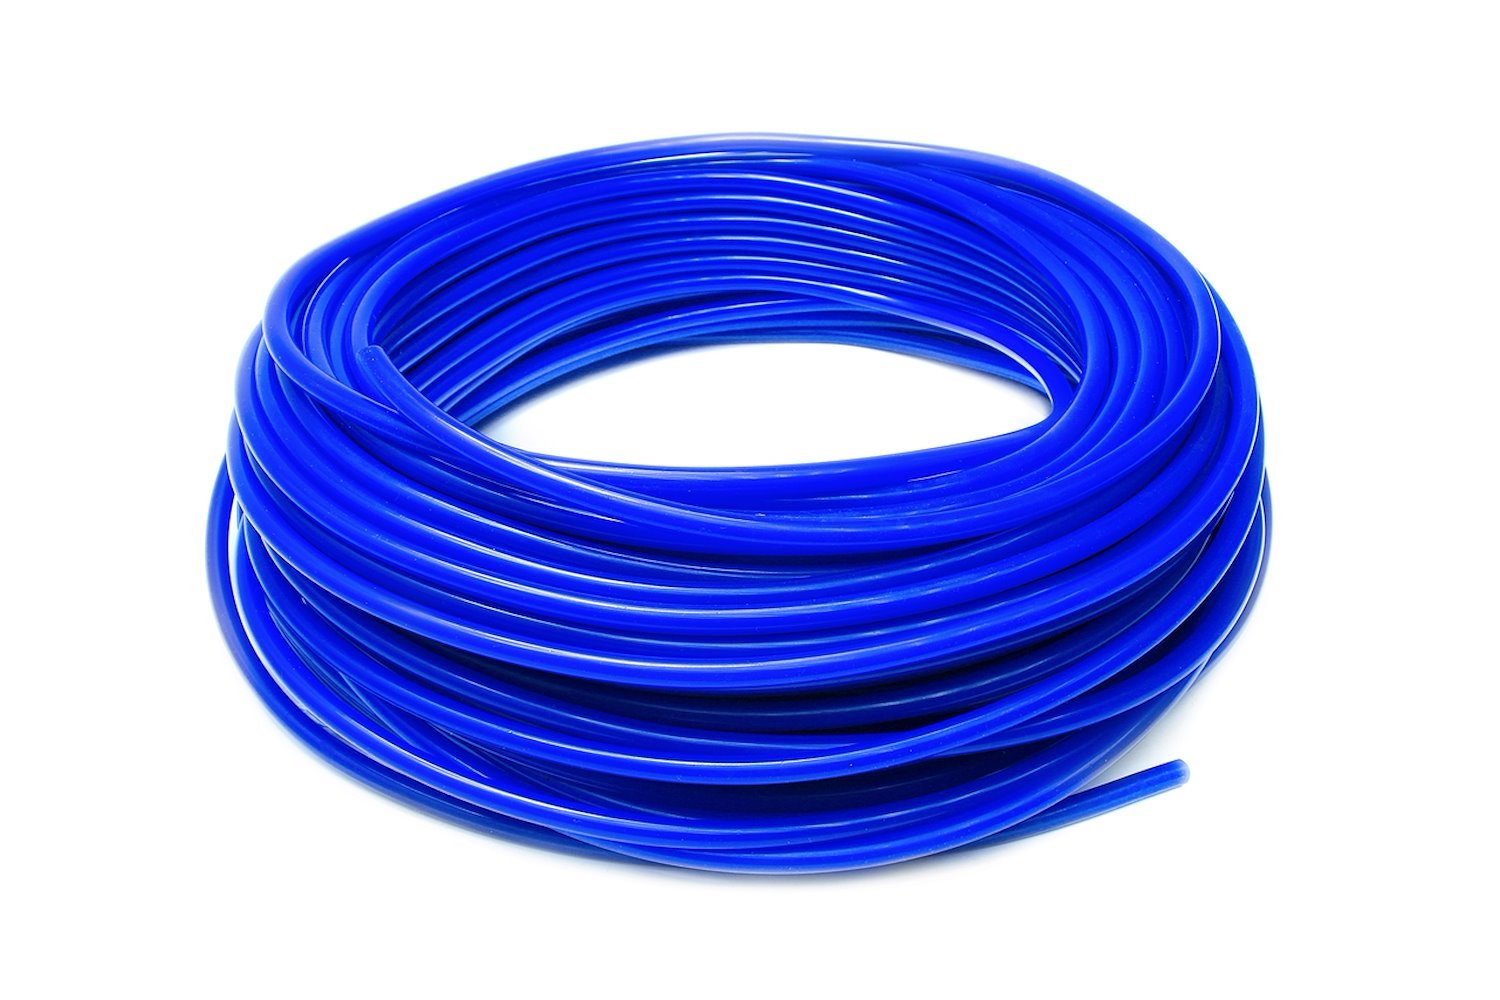 HTSVH35-BLUEx50 High-Temperature Silicone Vacuum Hose Tubing, 3.5 mm ID, 50 ft. Roll, Blue